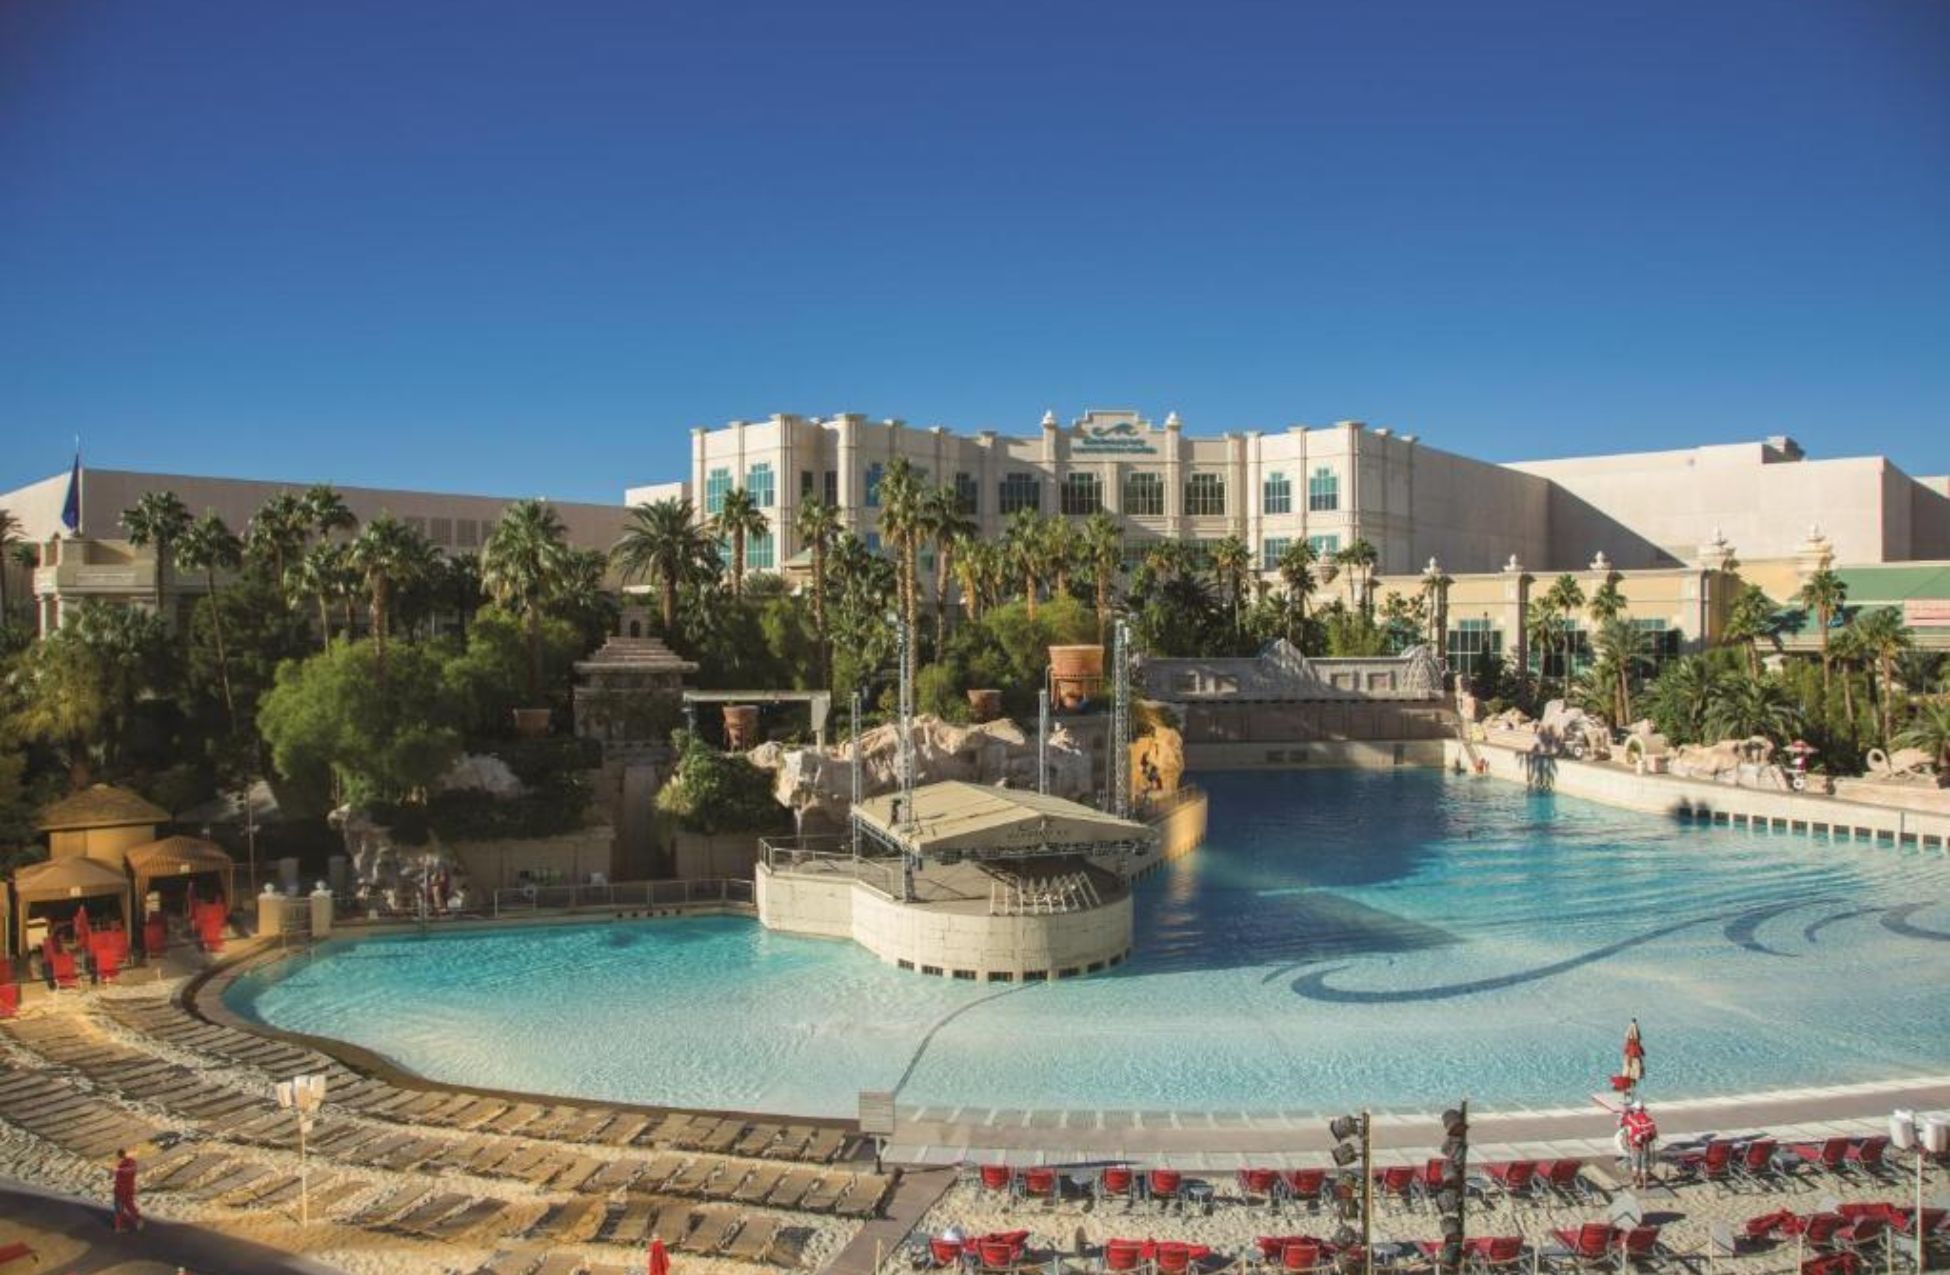 Mandalay Bay Resort And Casino - Best Hotels In Las Vegas